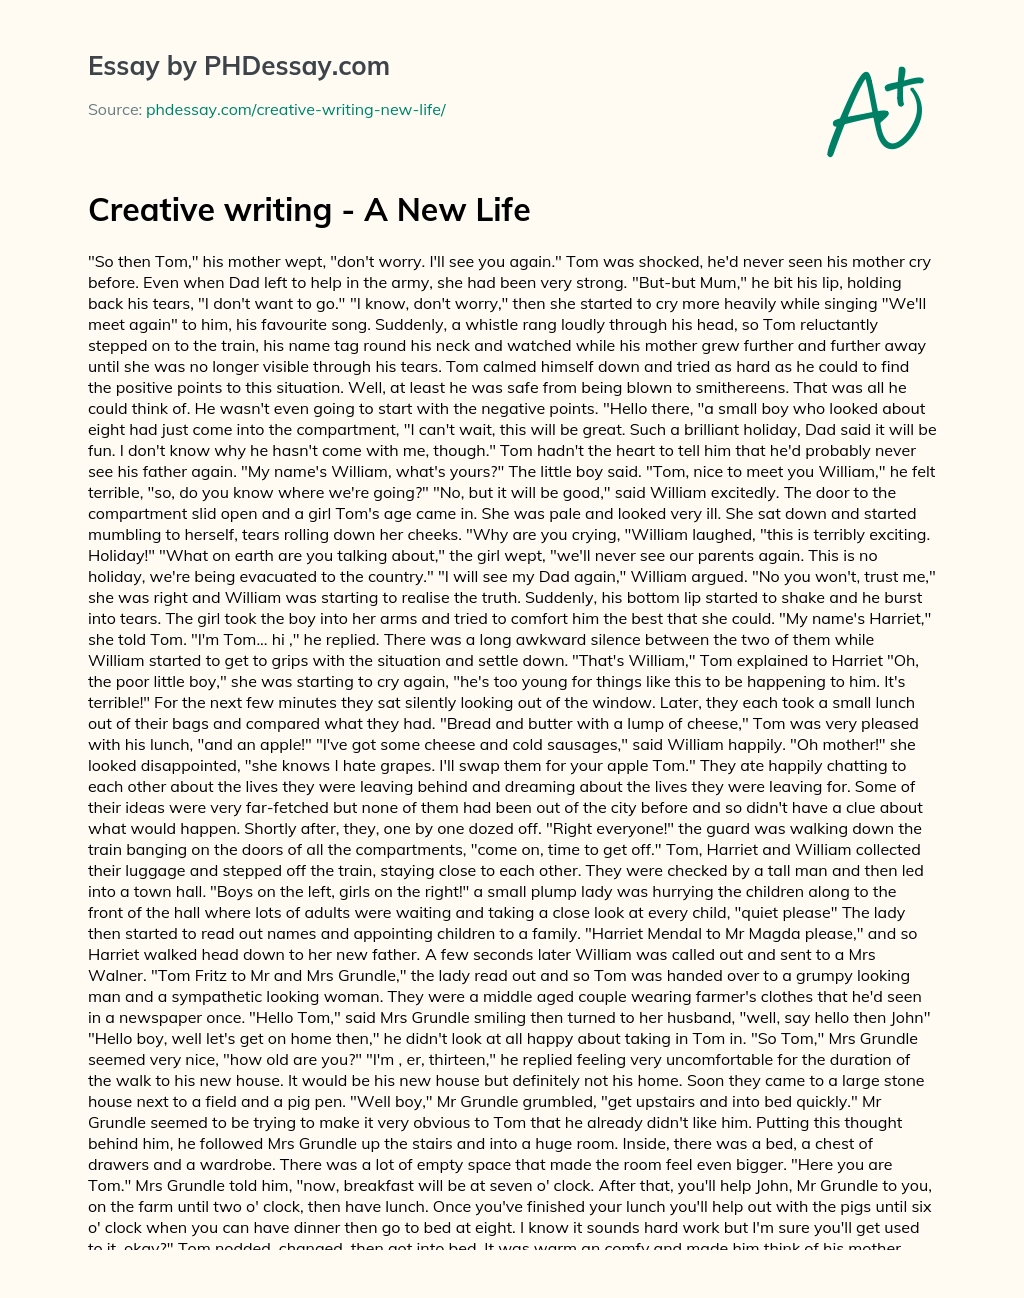 Creative writing – A New Life essay